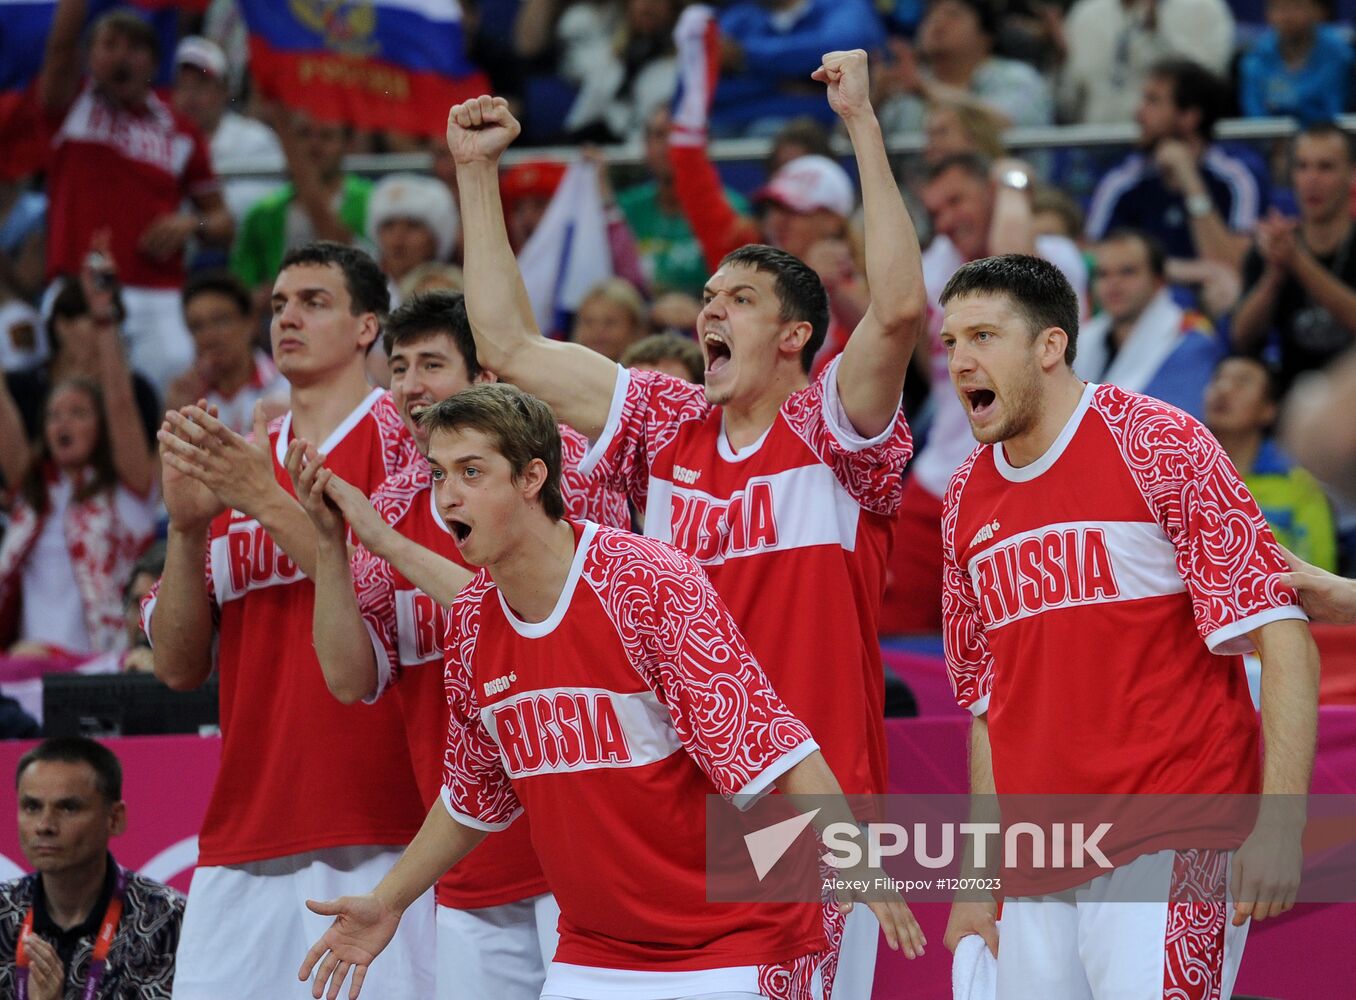 London 2012 Olympics. Men's Basketball. Russia vs. Lithuania